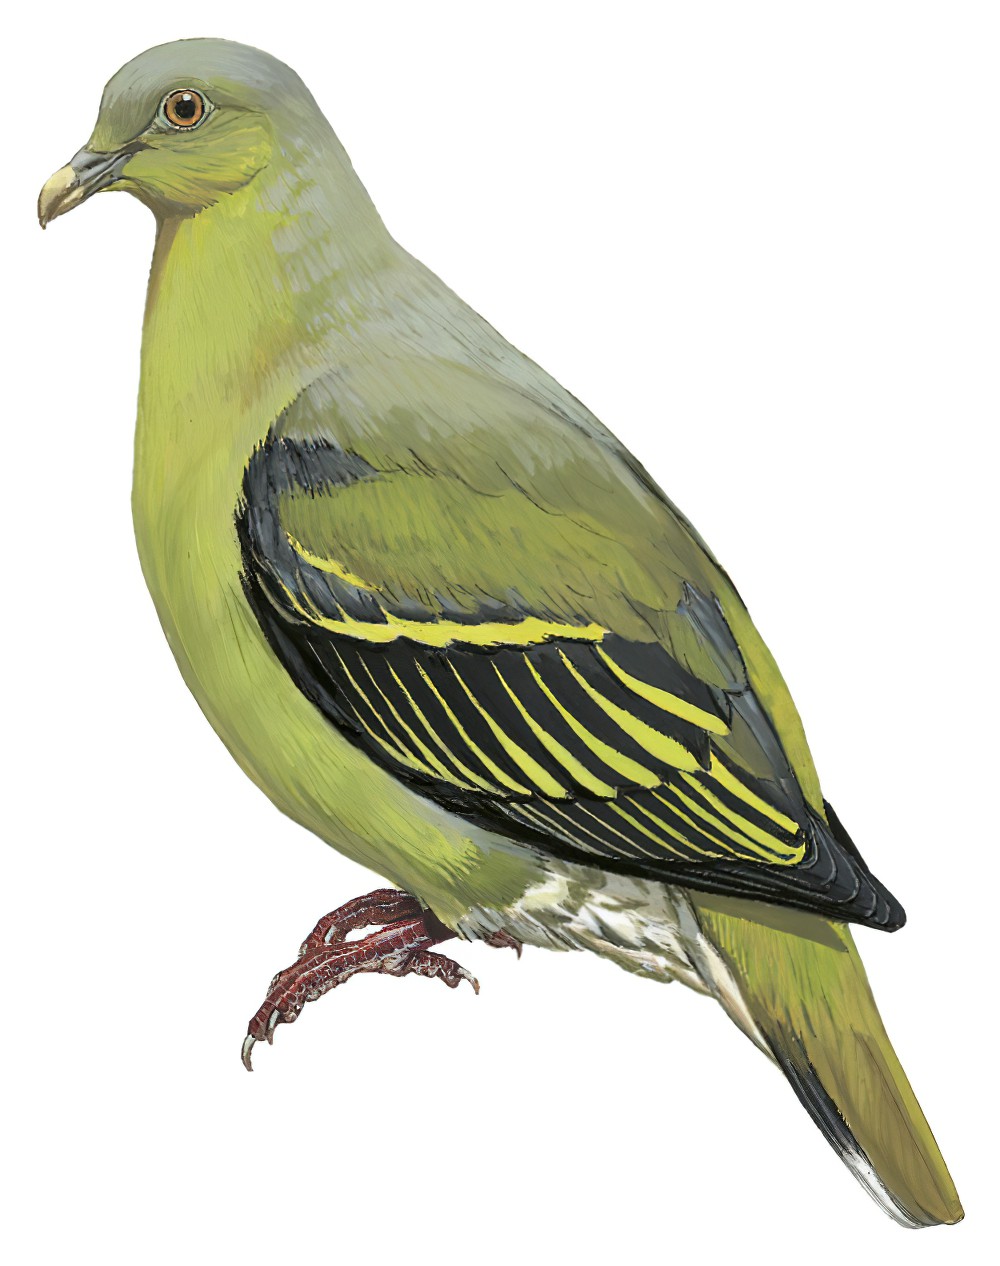 Timor Green-Pigeon / Treron psittaceus